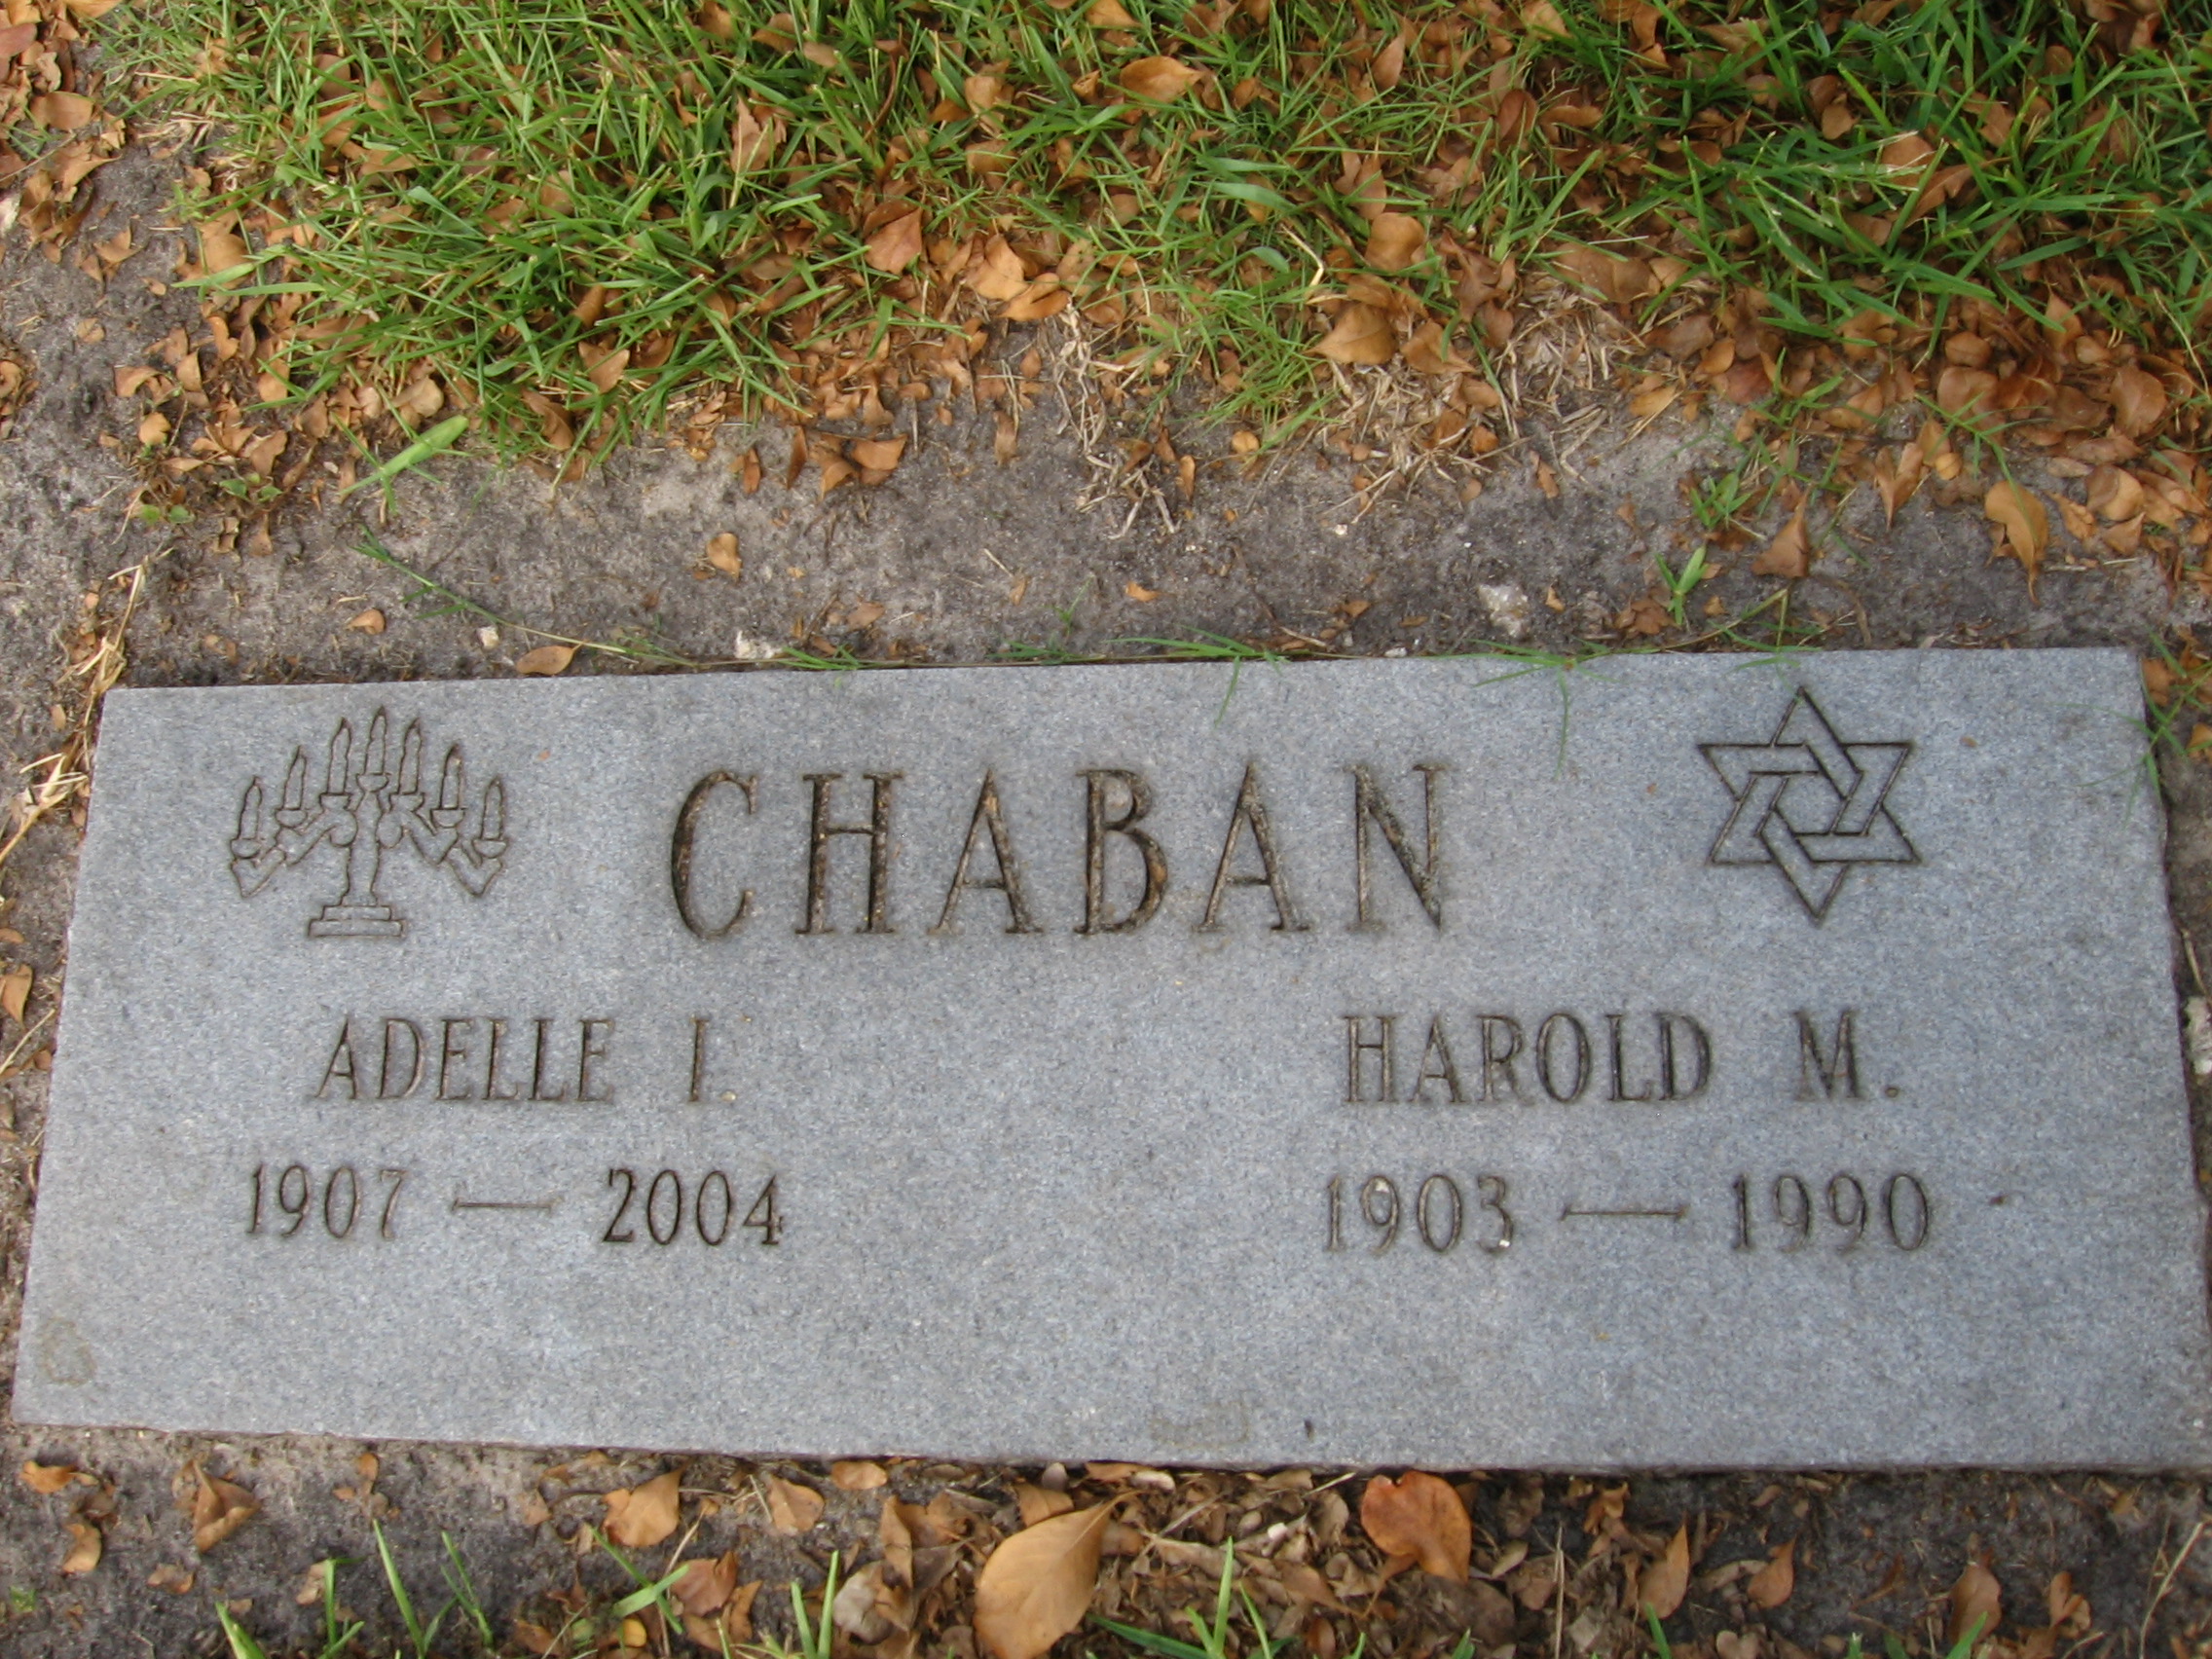 Adelle I Chaban